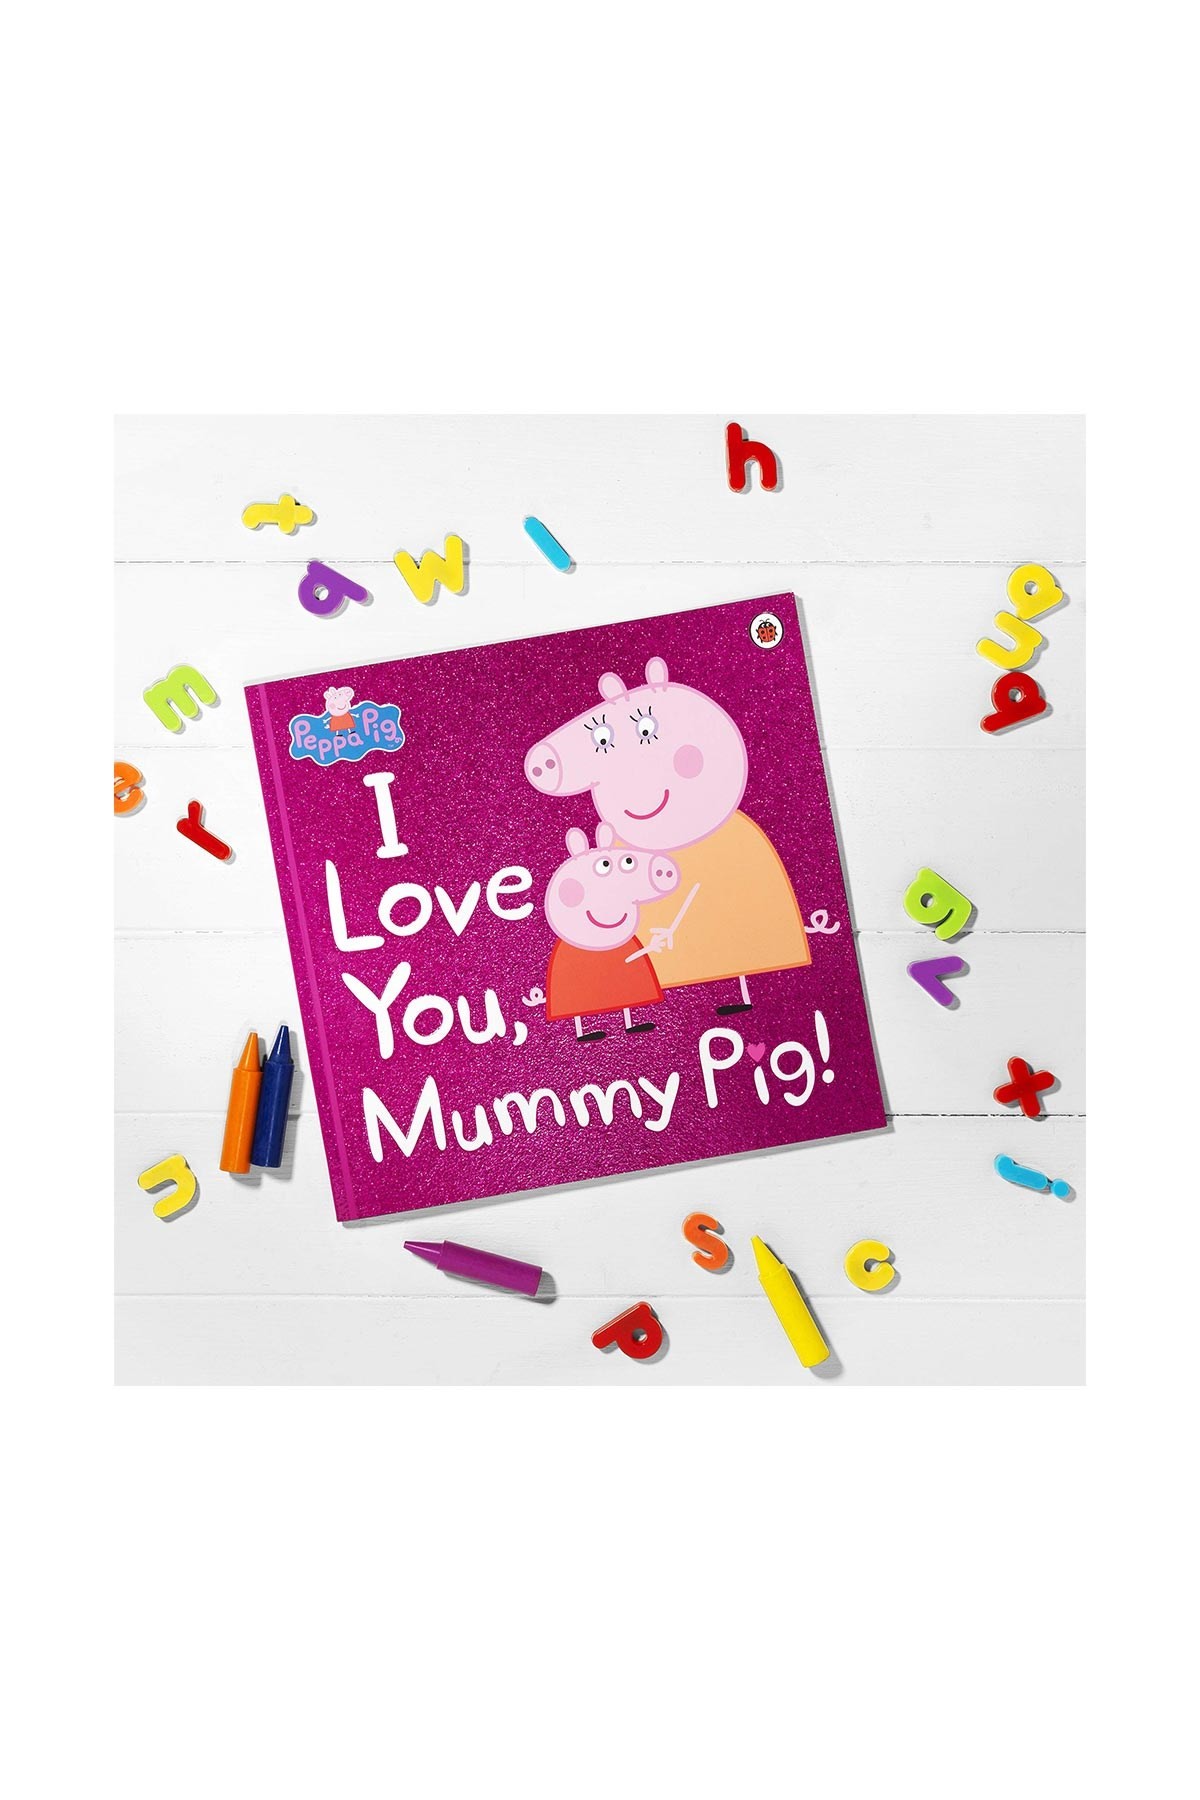 Peppa Pig: I Love You Mummy Pig